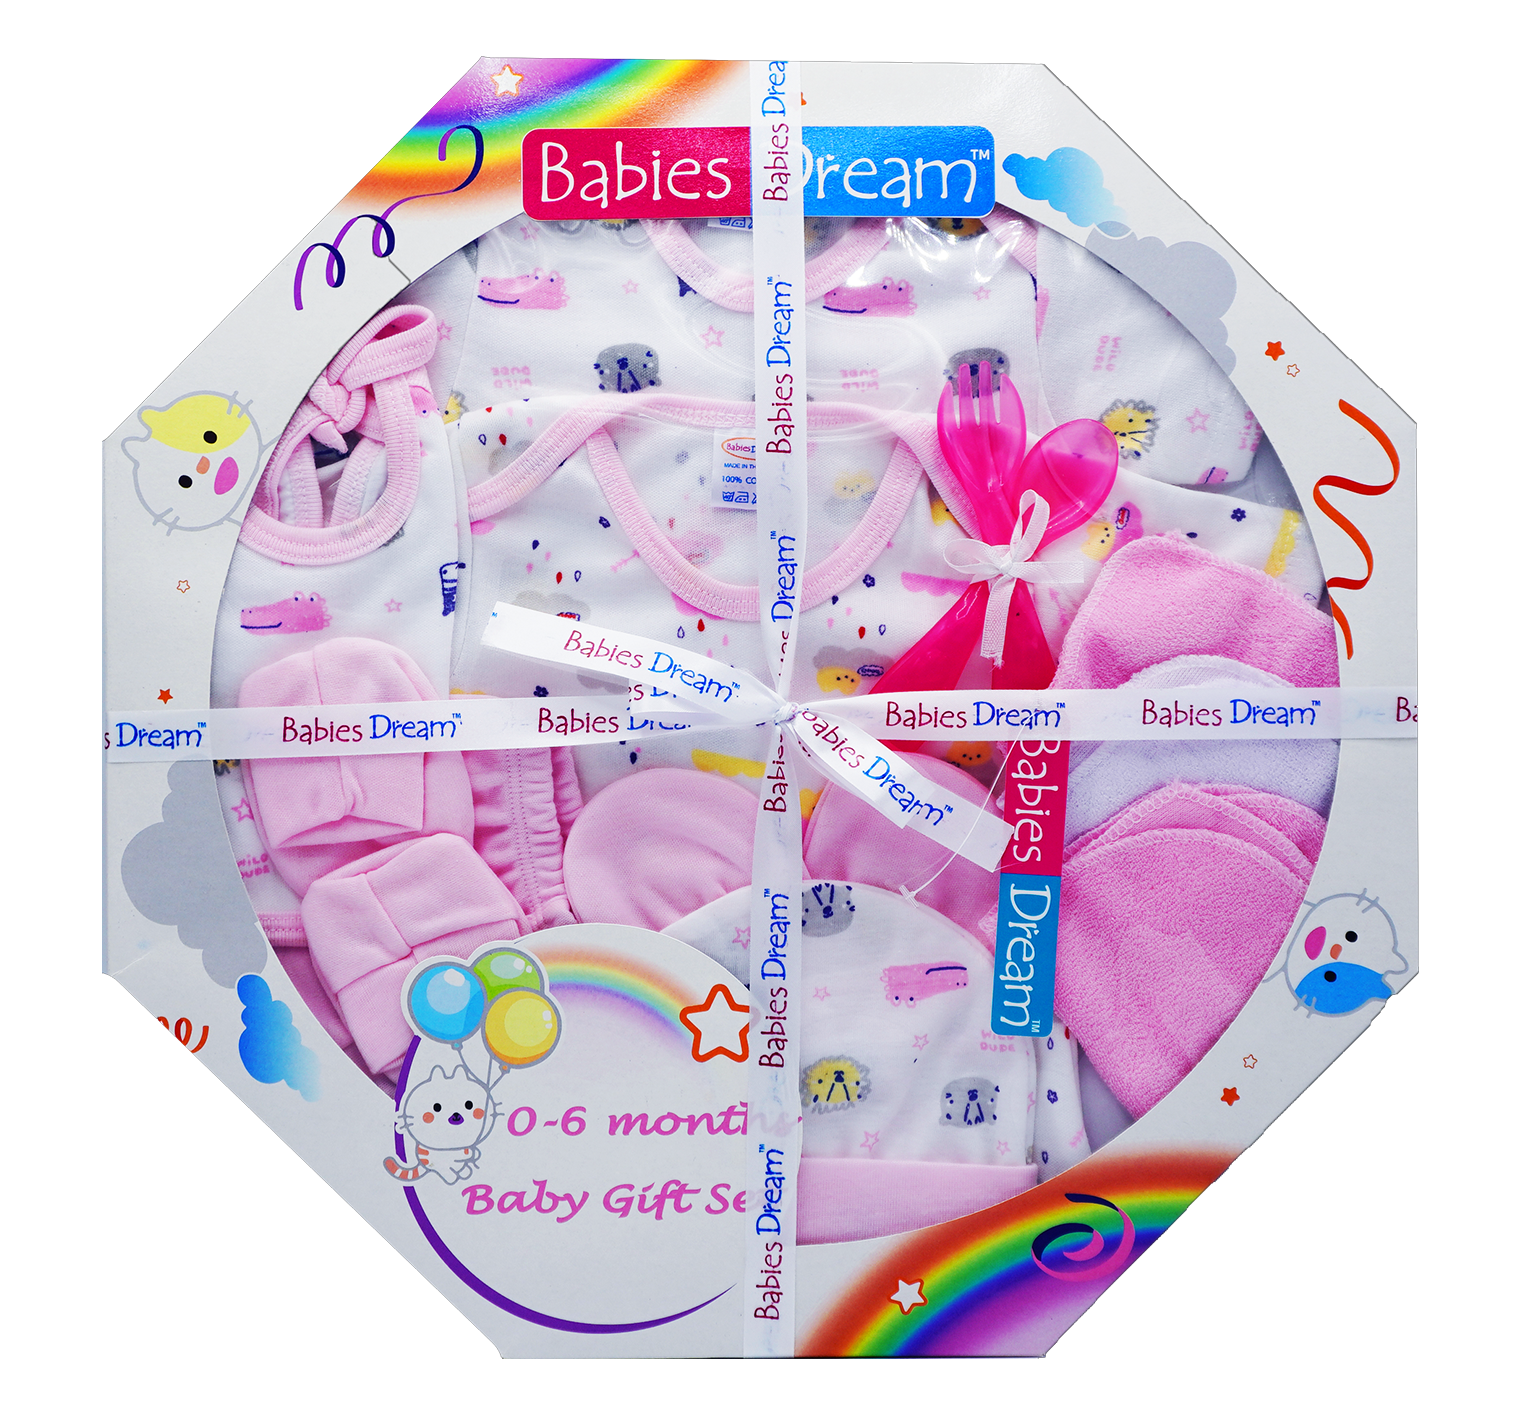 Babies Dream ชุดของขวัญเด็กแรกเกิด 11 ชิ้น กล่องทรง 8 เหลี่ยม  CB-005